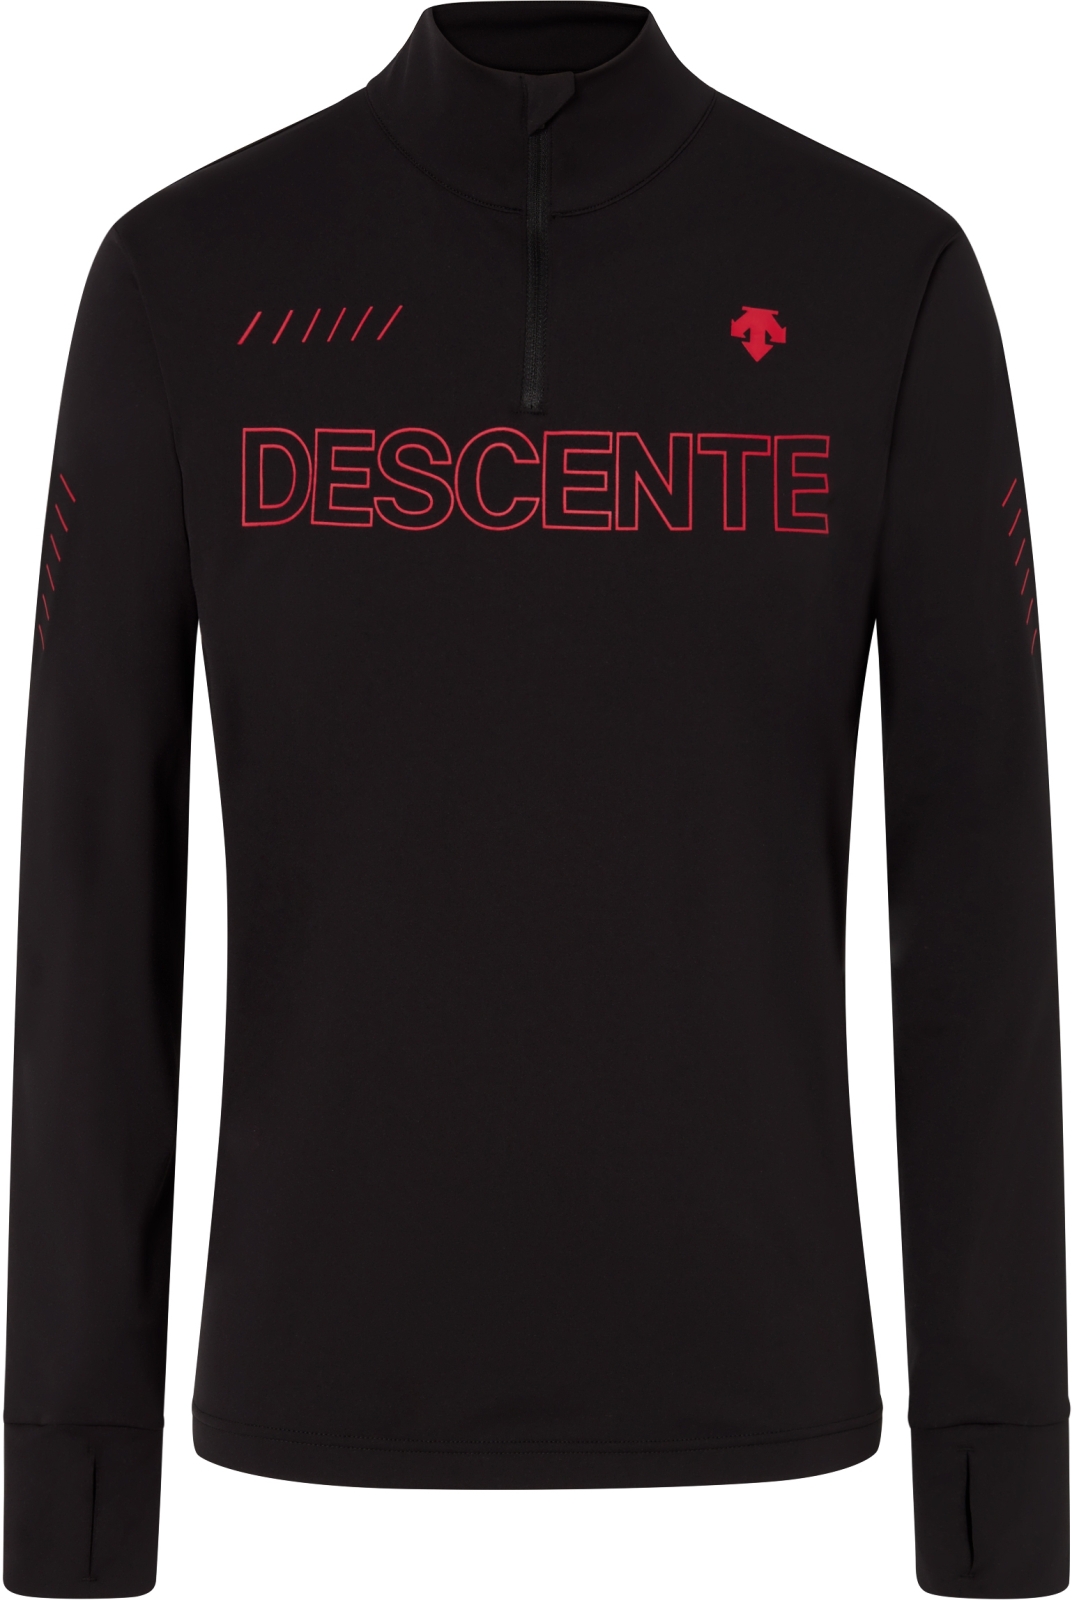 E-shop Descente Descente 1/4 Zip T-Neck - Black XL